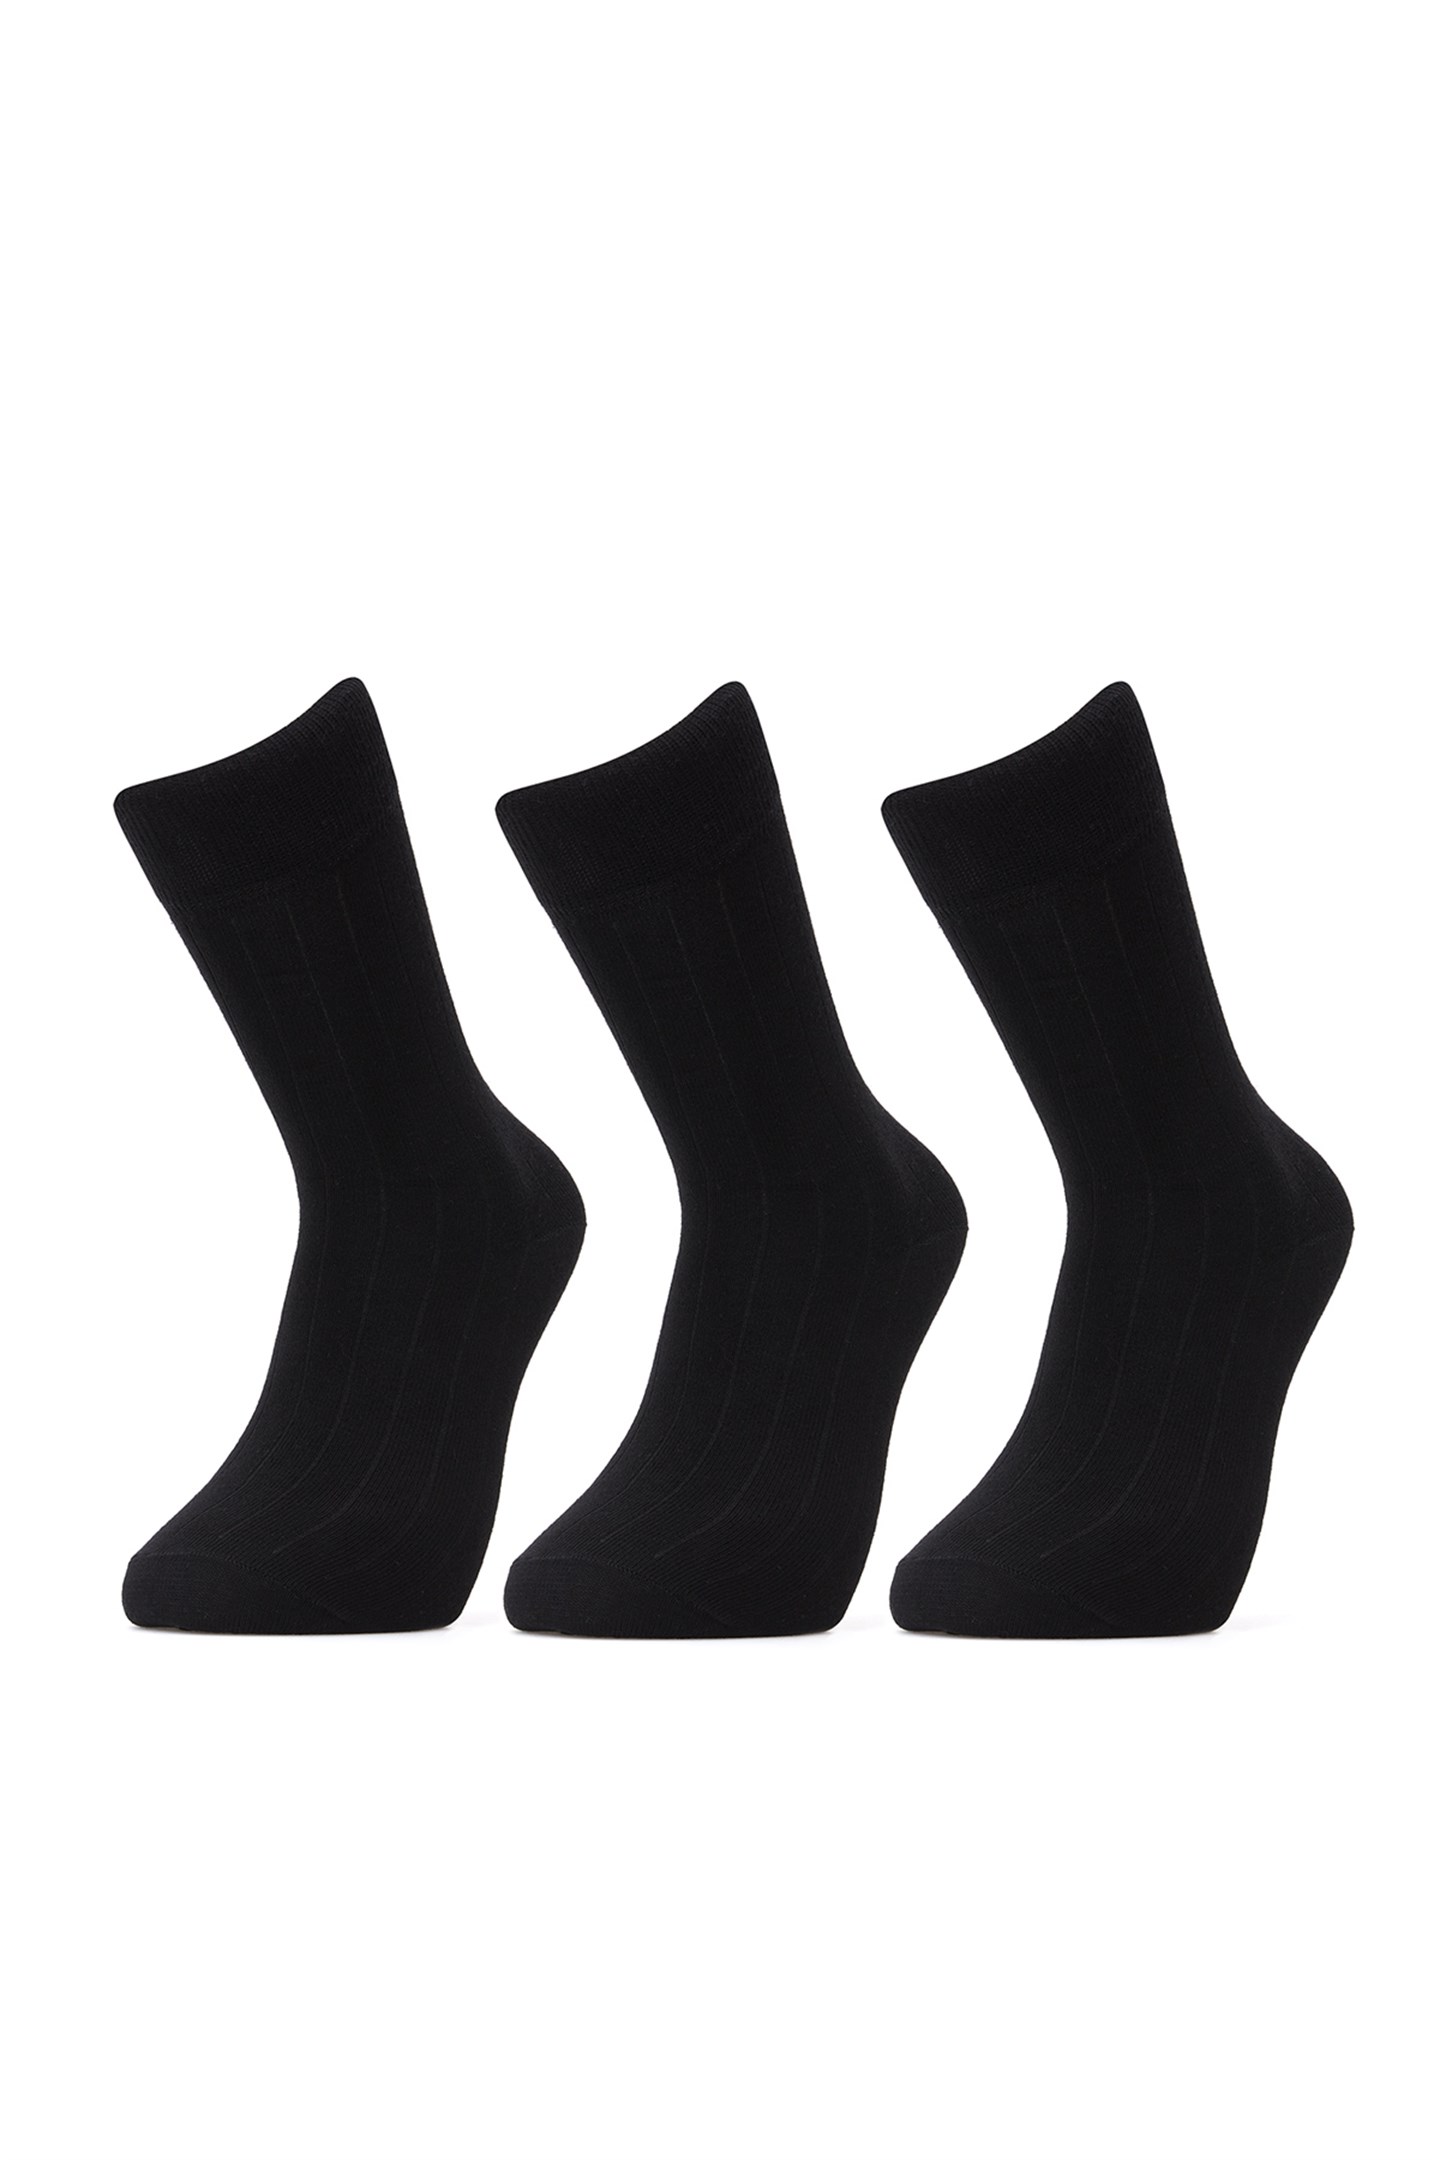 Noah Erkek 3'Lü Soket Çorap Siyah - Lee Cooper